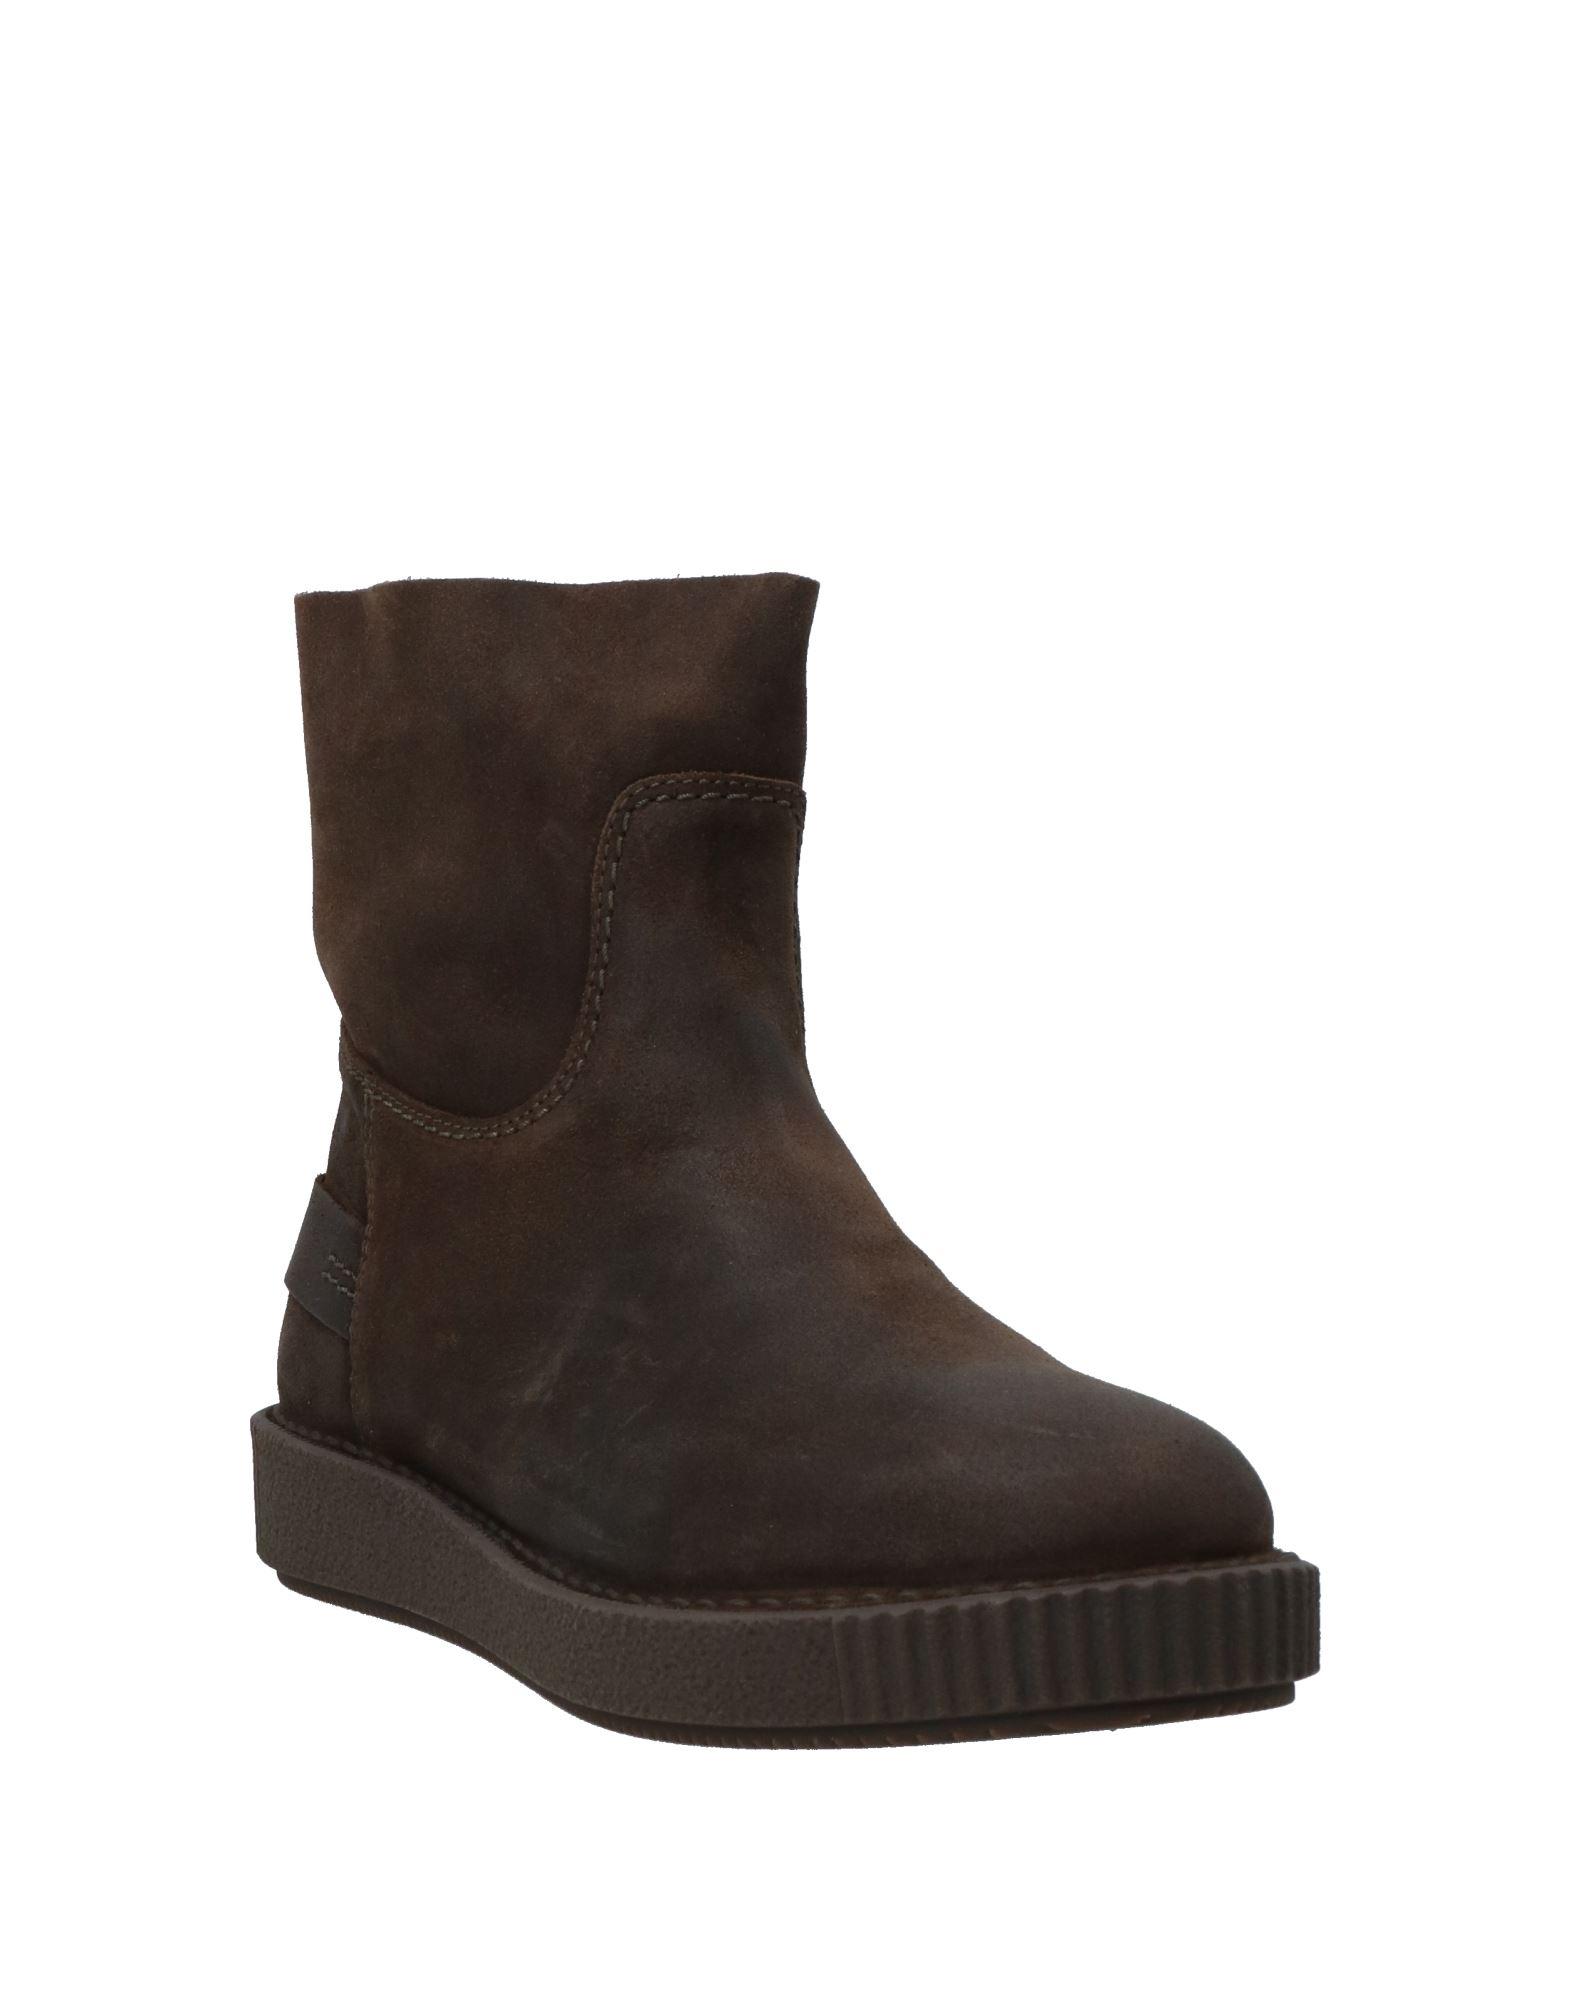 spectrum Let op Maakte zich klaar Shabbies Amsterdam Ankle Boots in Brown | Lyst